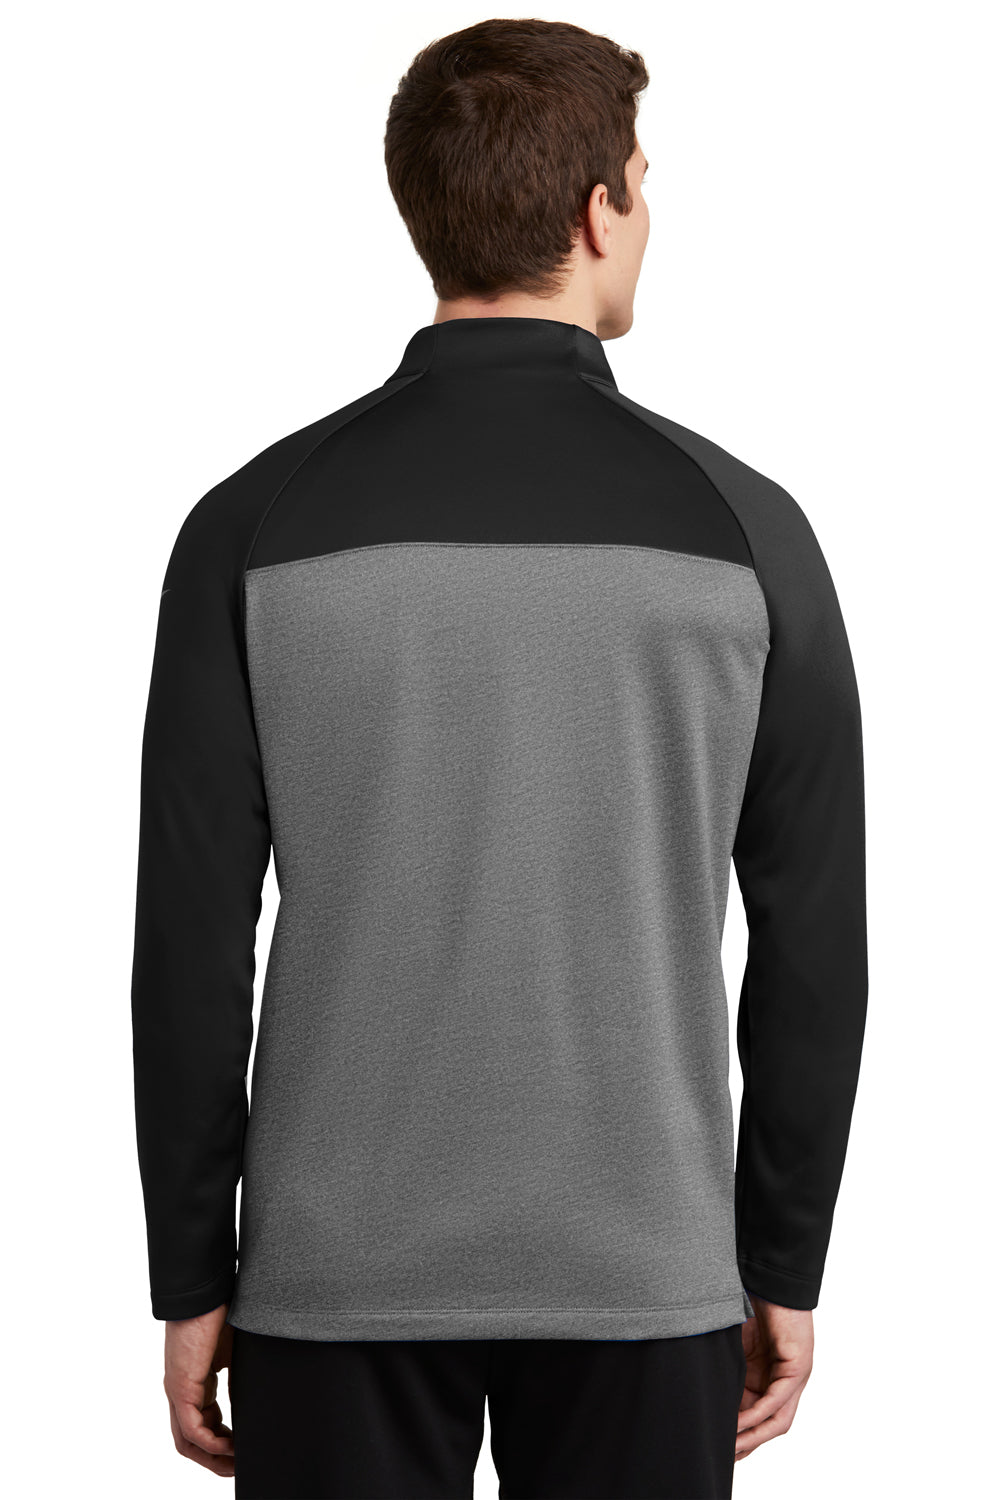 Nike NKAH6254 Mens Therma-Fit Moisture Wicking Fleece 1/4 Zip Sweatshirt Black/Heather Grey Model Back